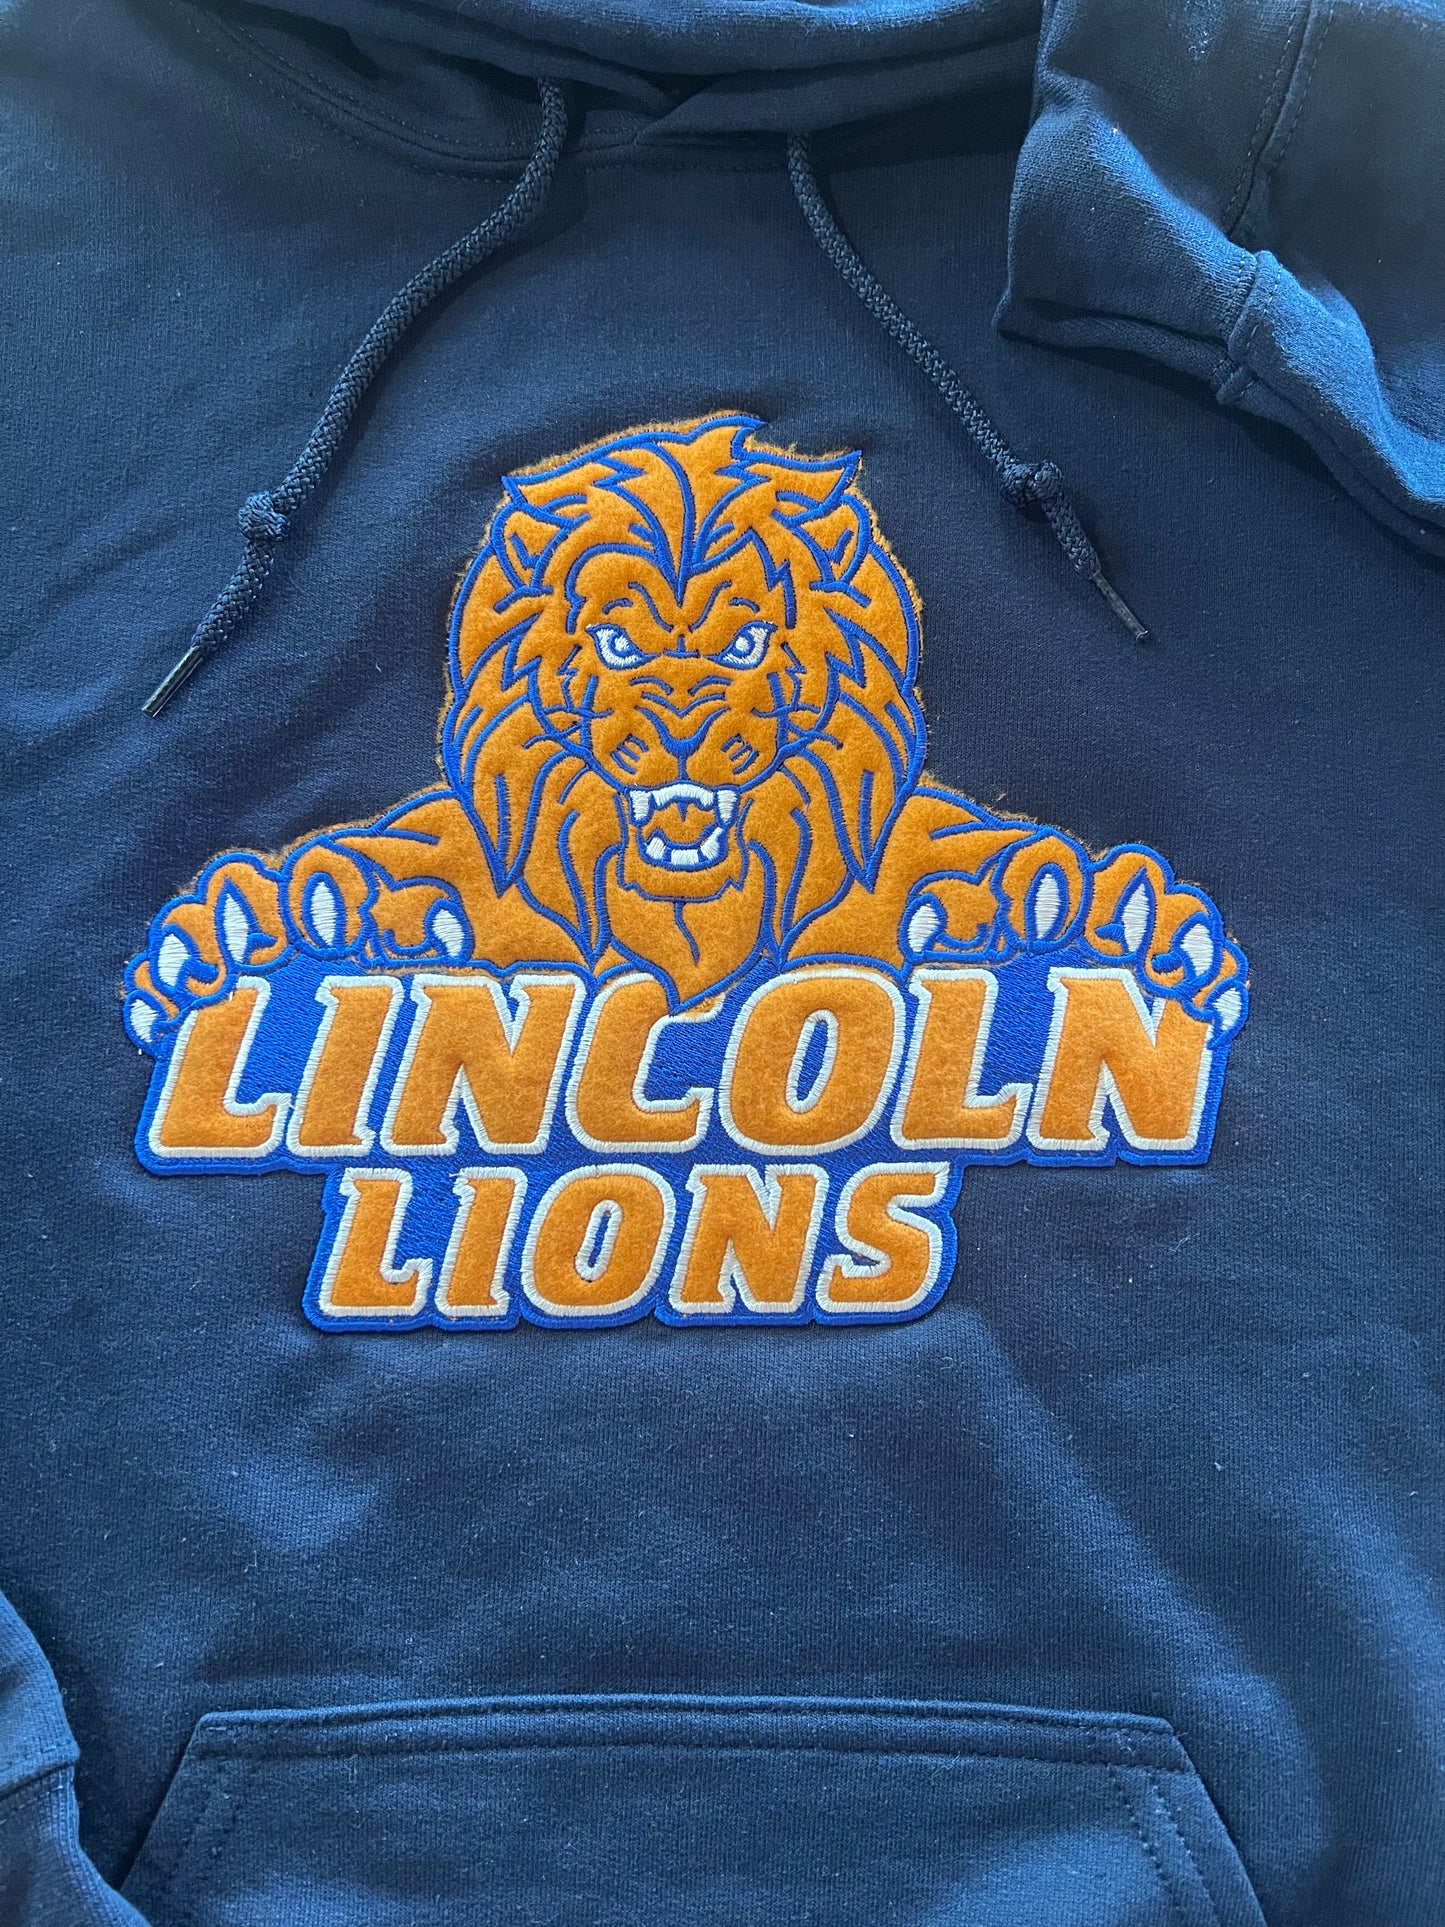 Lincoln Lions LU Hoodie